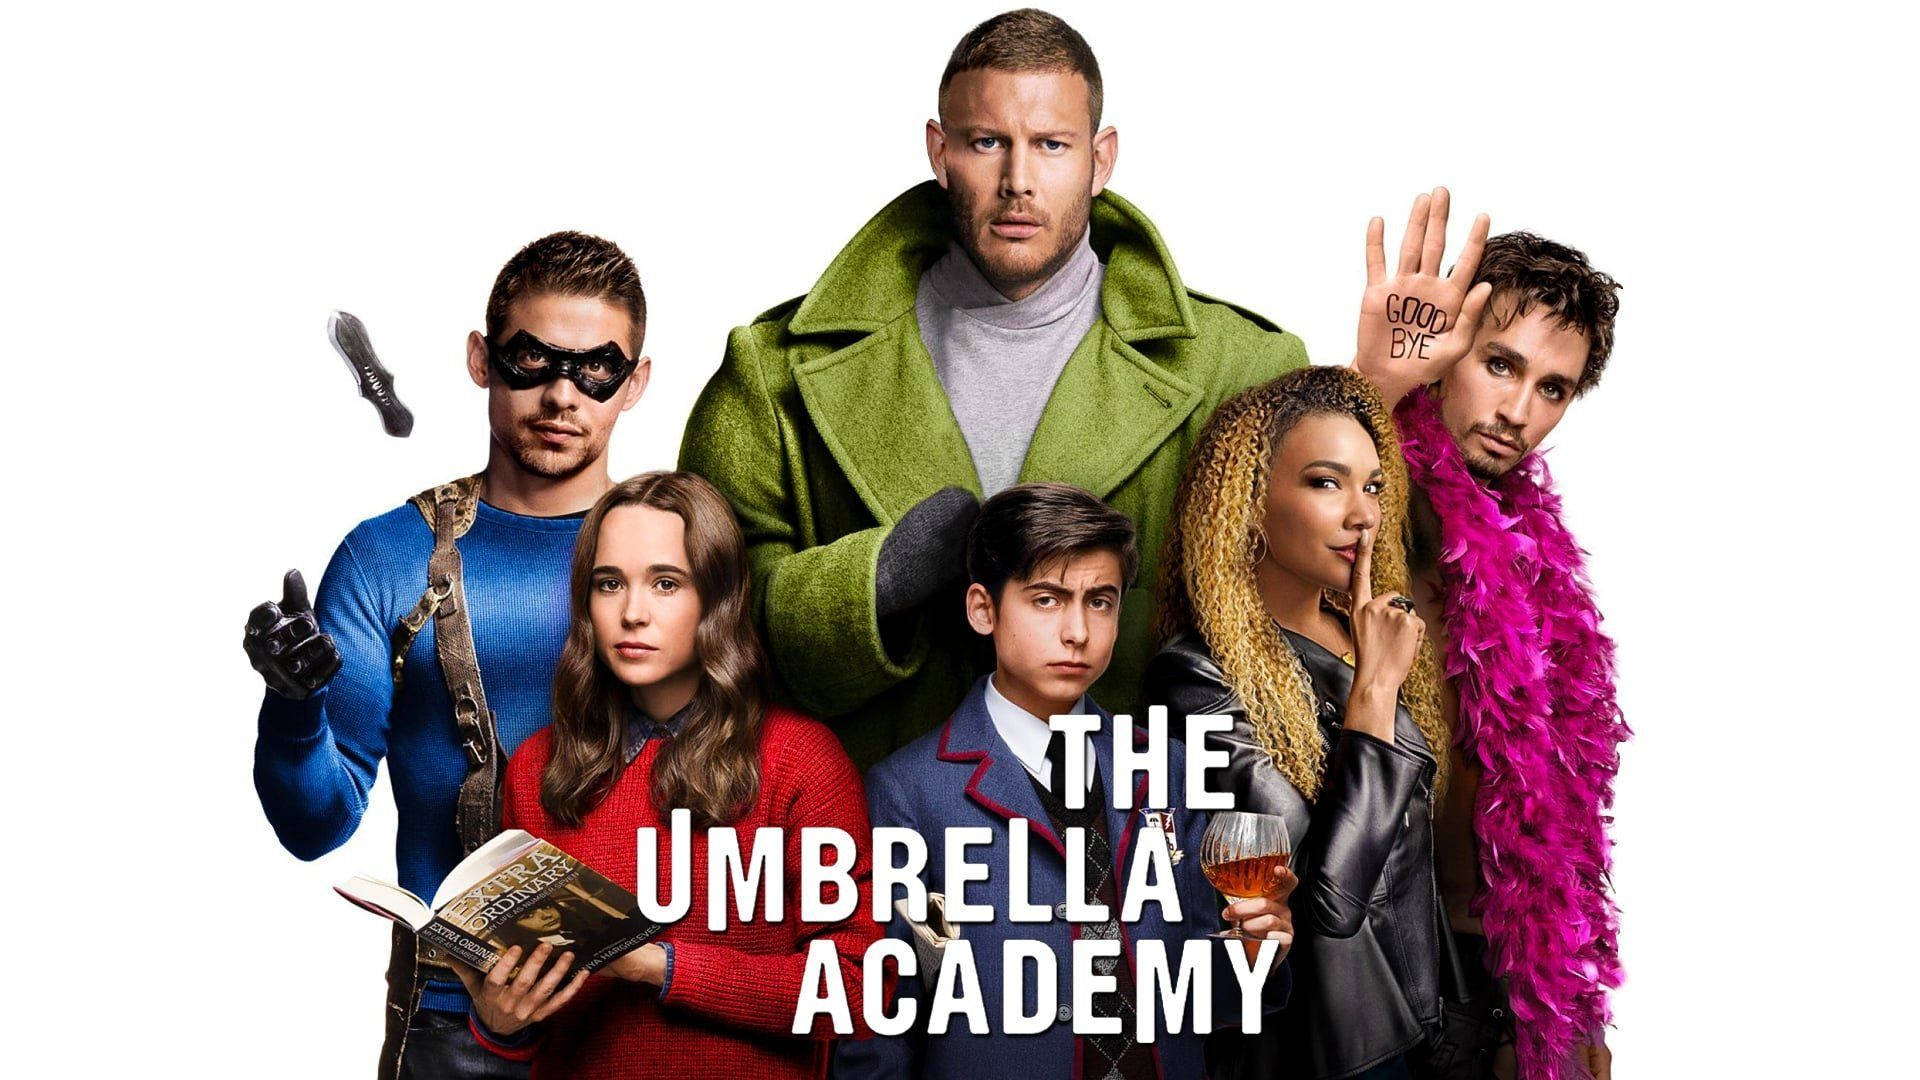 The Umbrella Academy - United Together